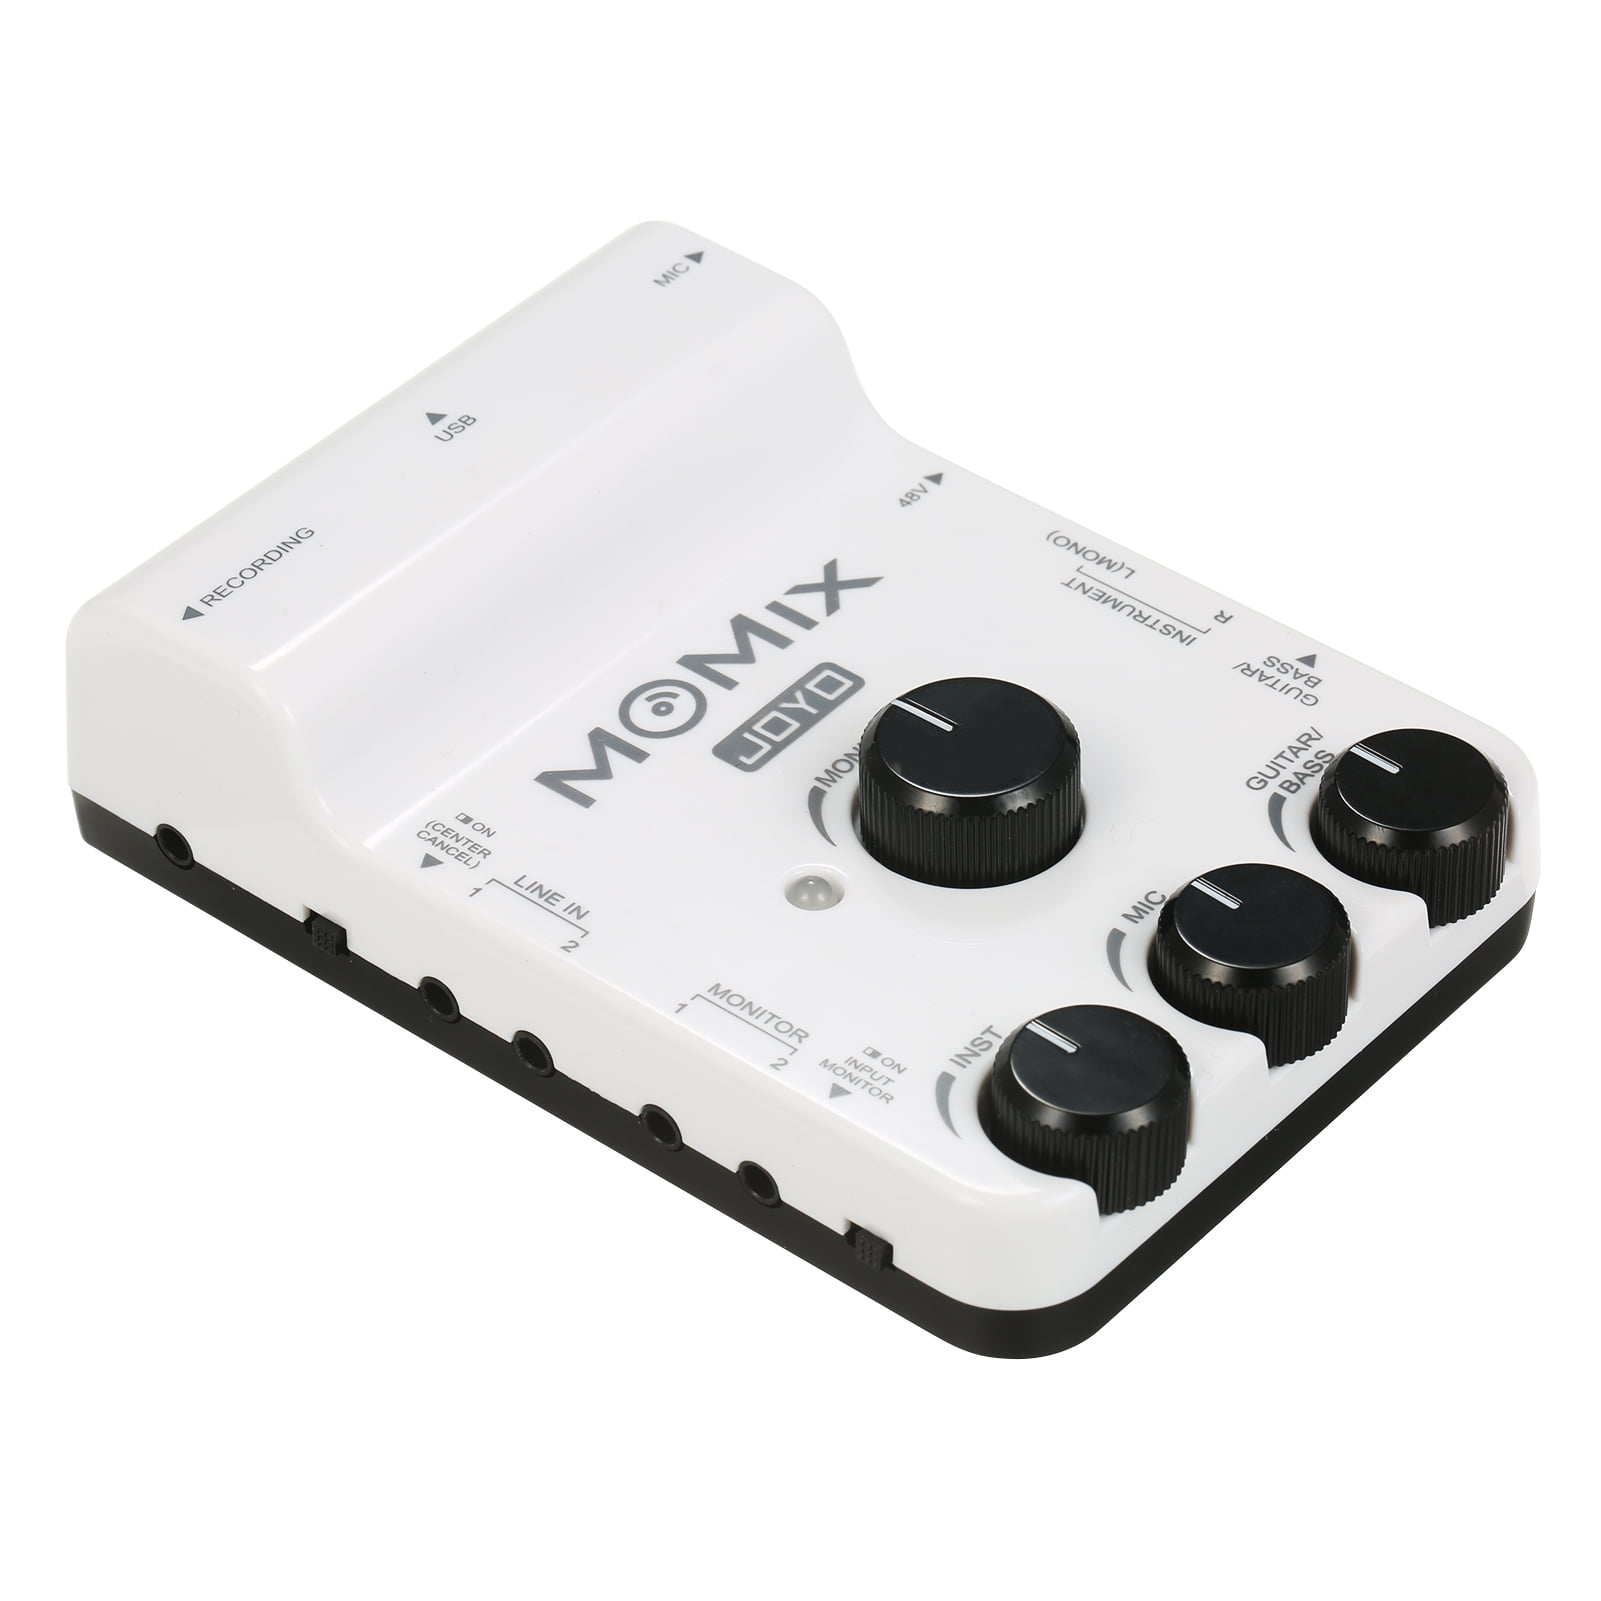 JOYO MOMIX USB Audio Interface Mixer Audio Mixer Professional Sound Mixer for PC Audio Equipment Music Instruments Walmart.com